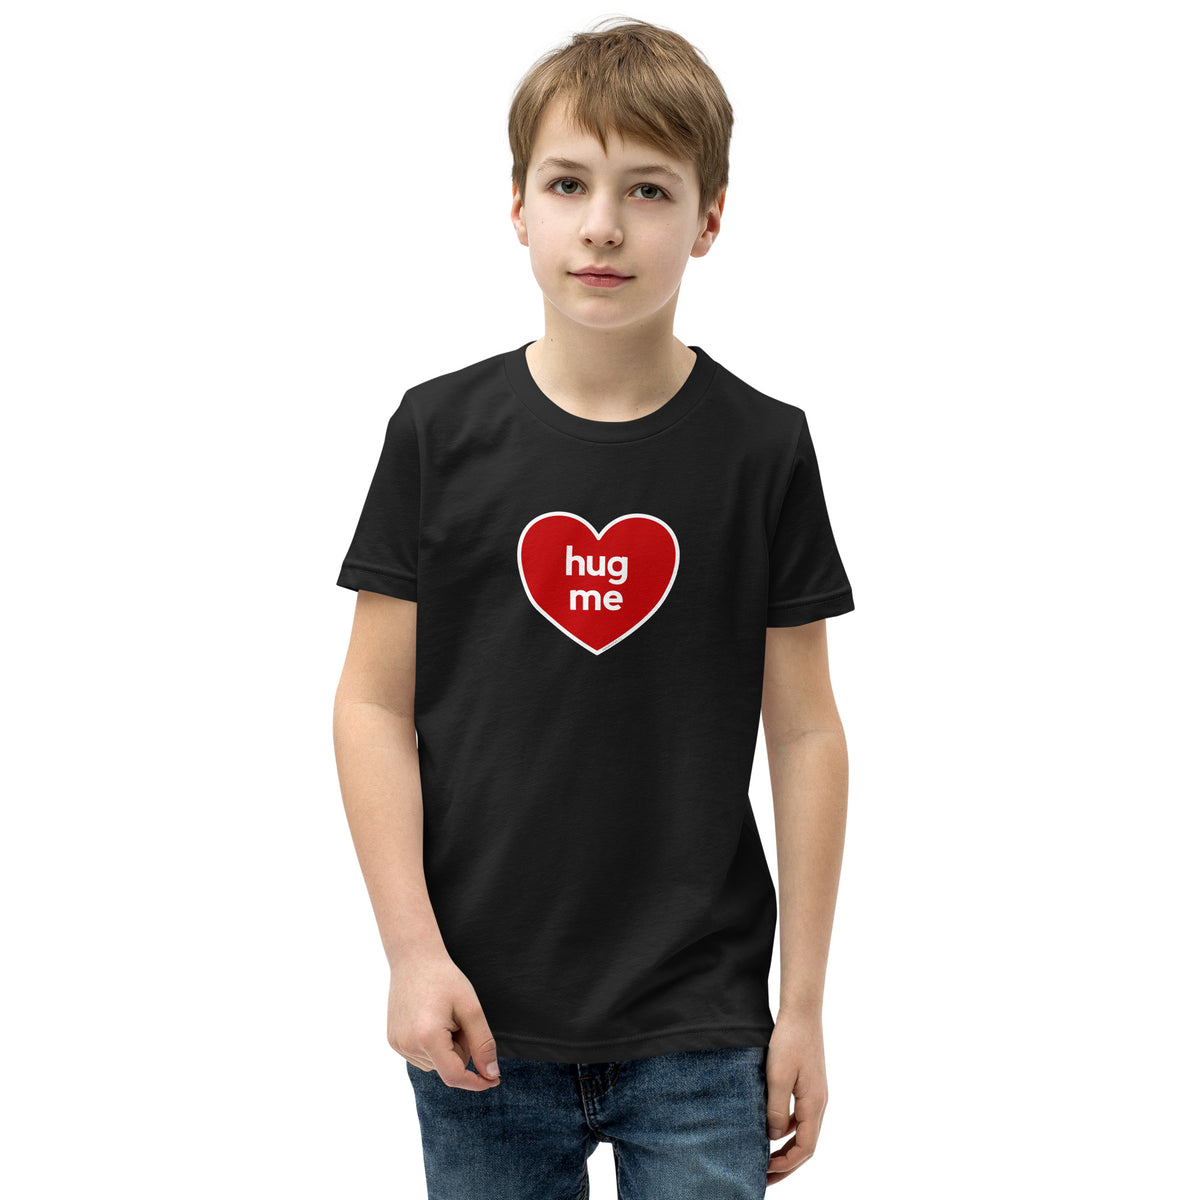 Hug Me Heart Kids Valentine’s Day T-Shirt